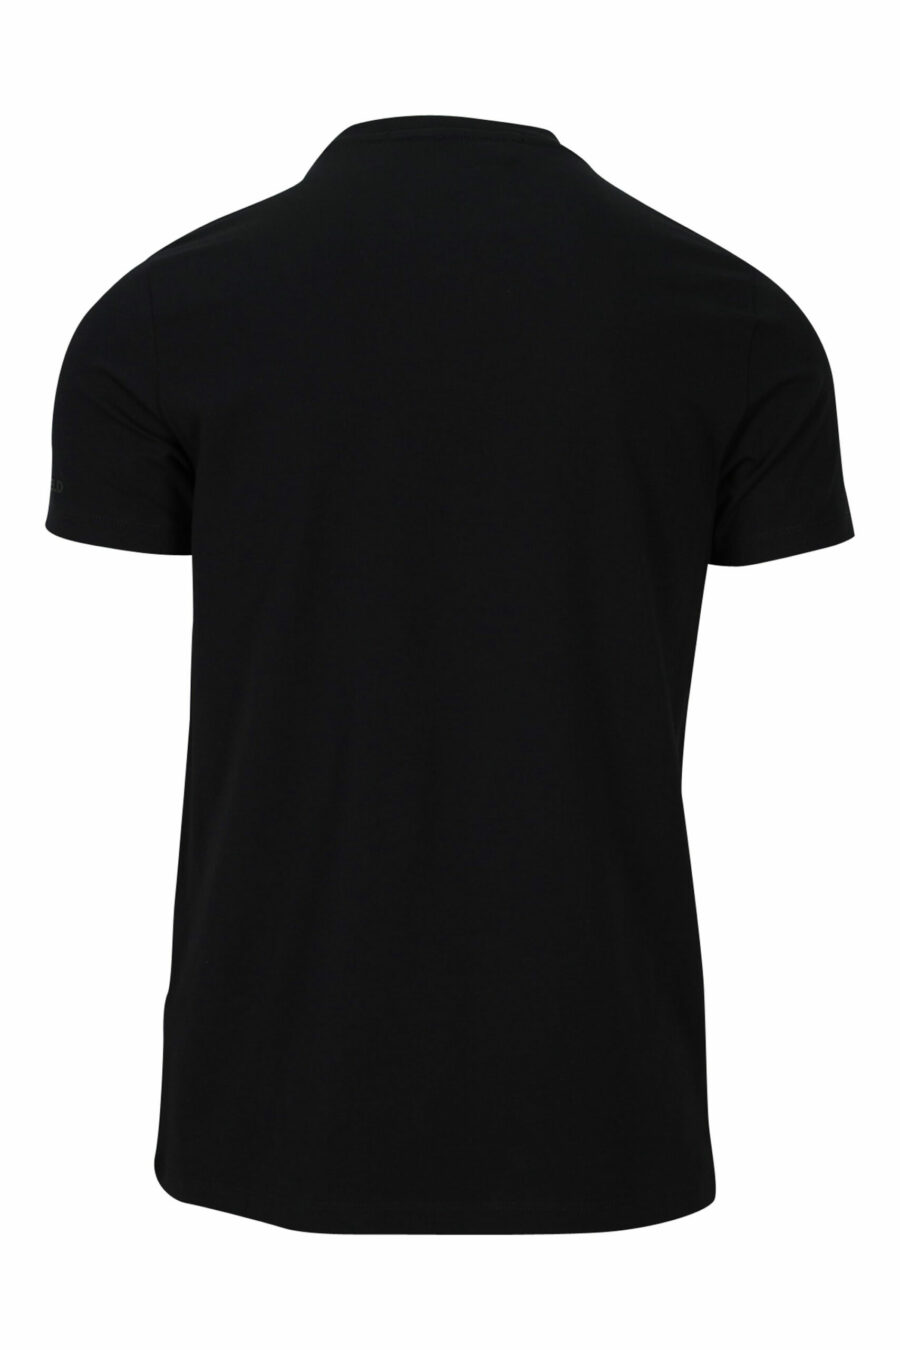 Camiseta negra con maxilogo "karl silueta" multicolor - 4062226400787 1 scaled